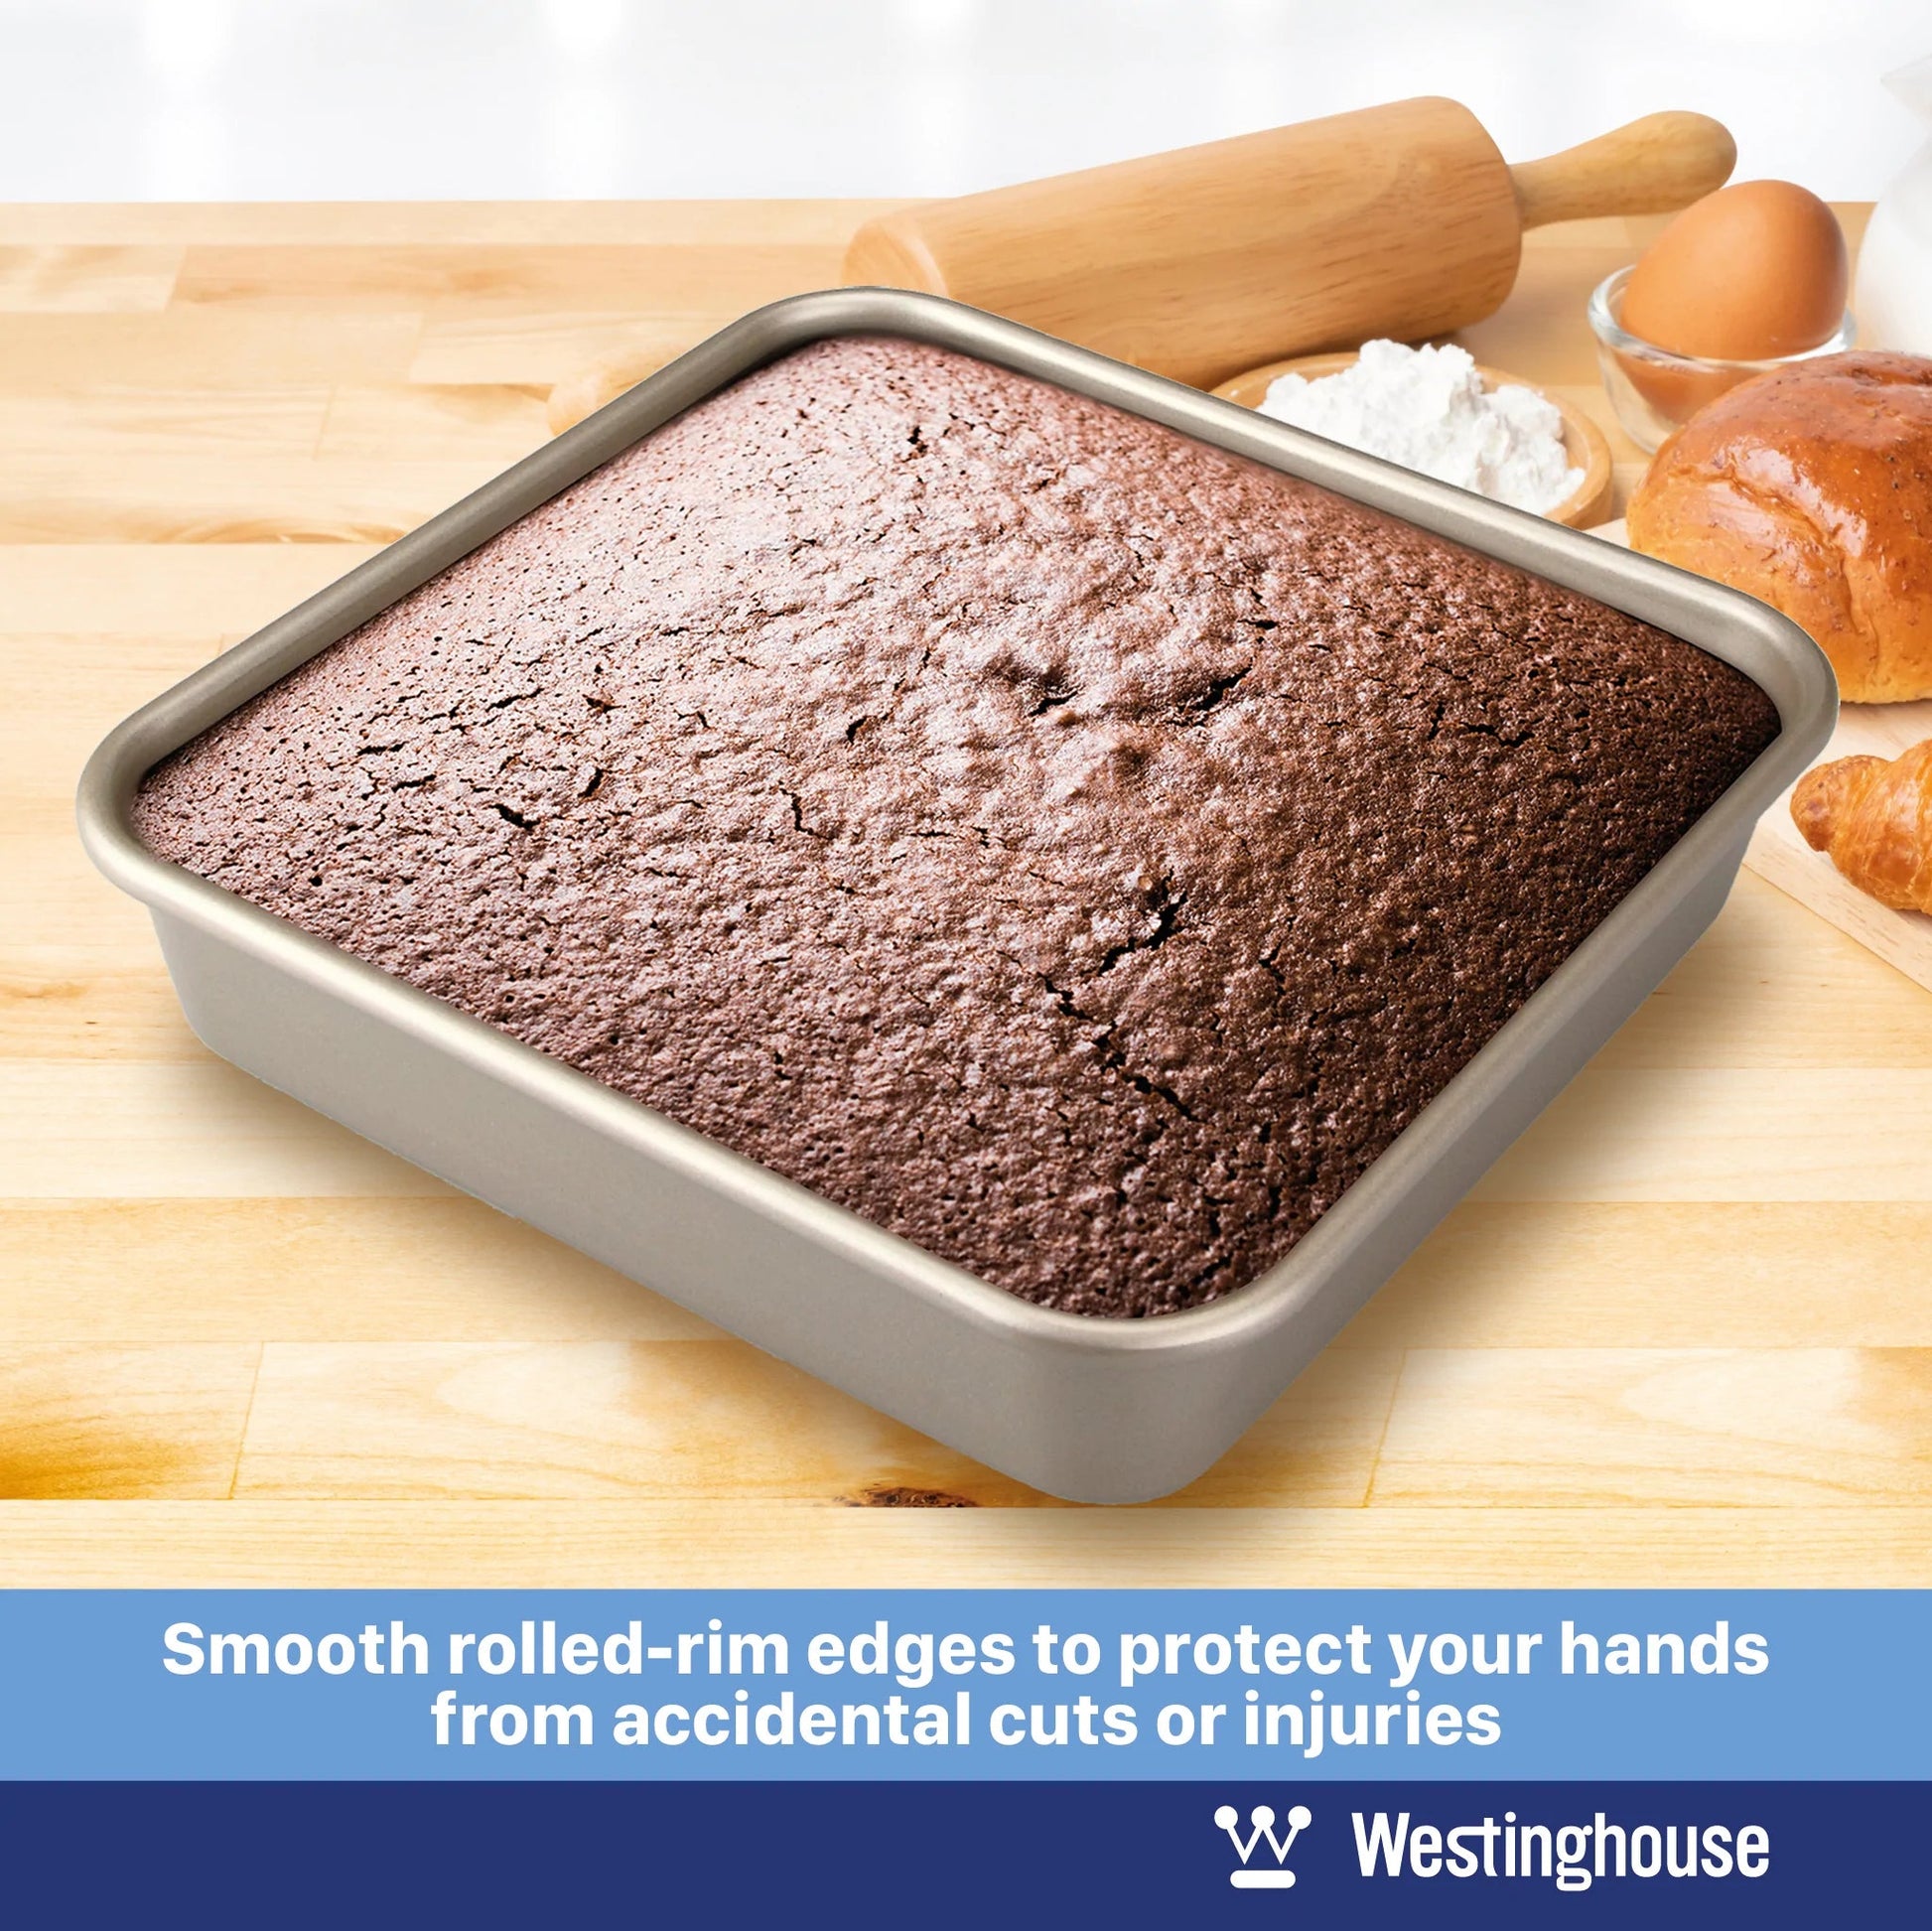 Nonstick Square Cake Pan 8 , Carbon Steel Pan with Premium Food